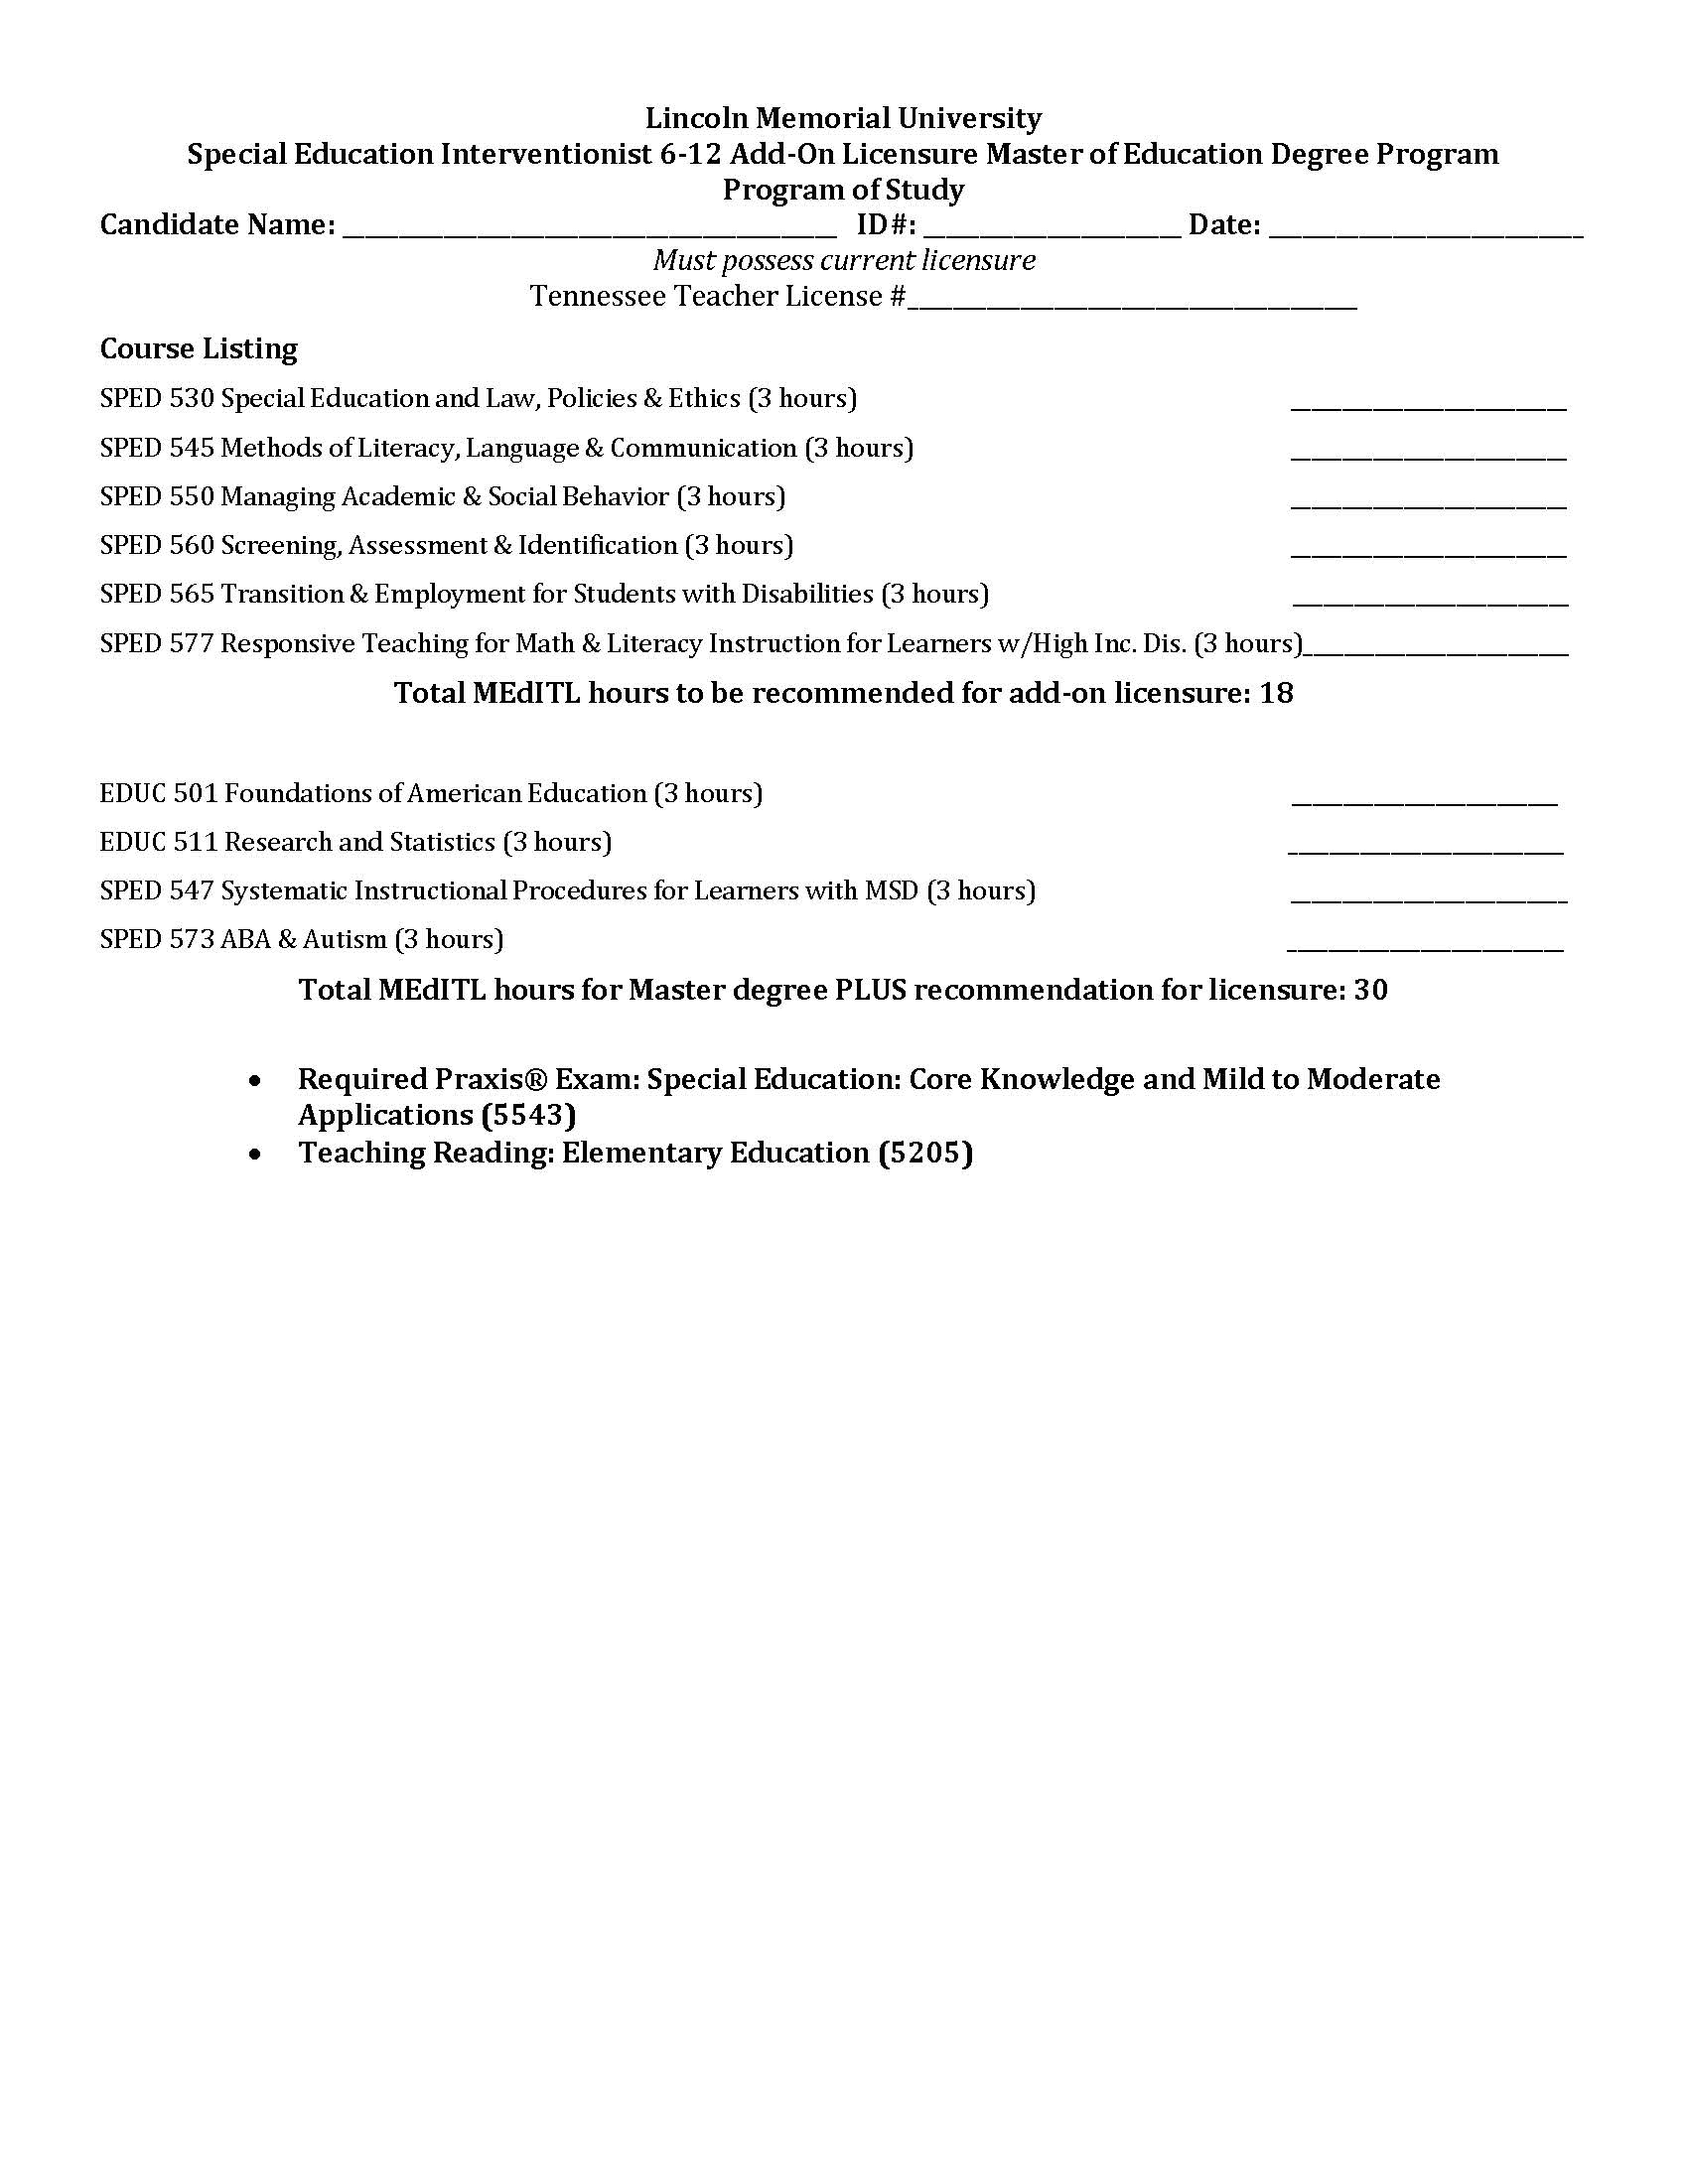 SPED Interventionist 6-12 Add-On Program of Study